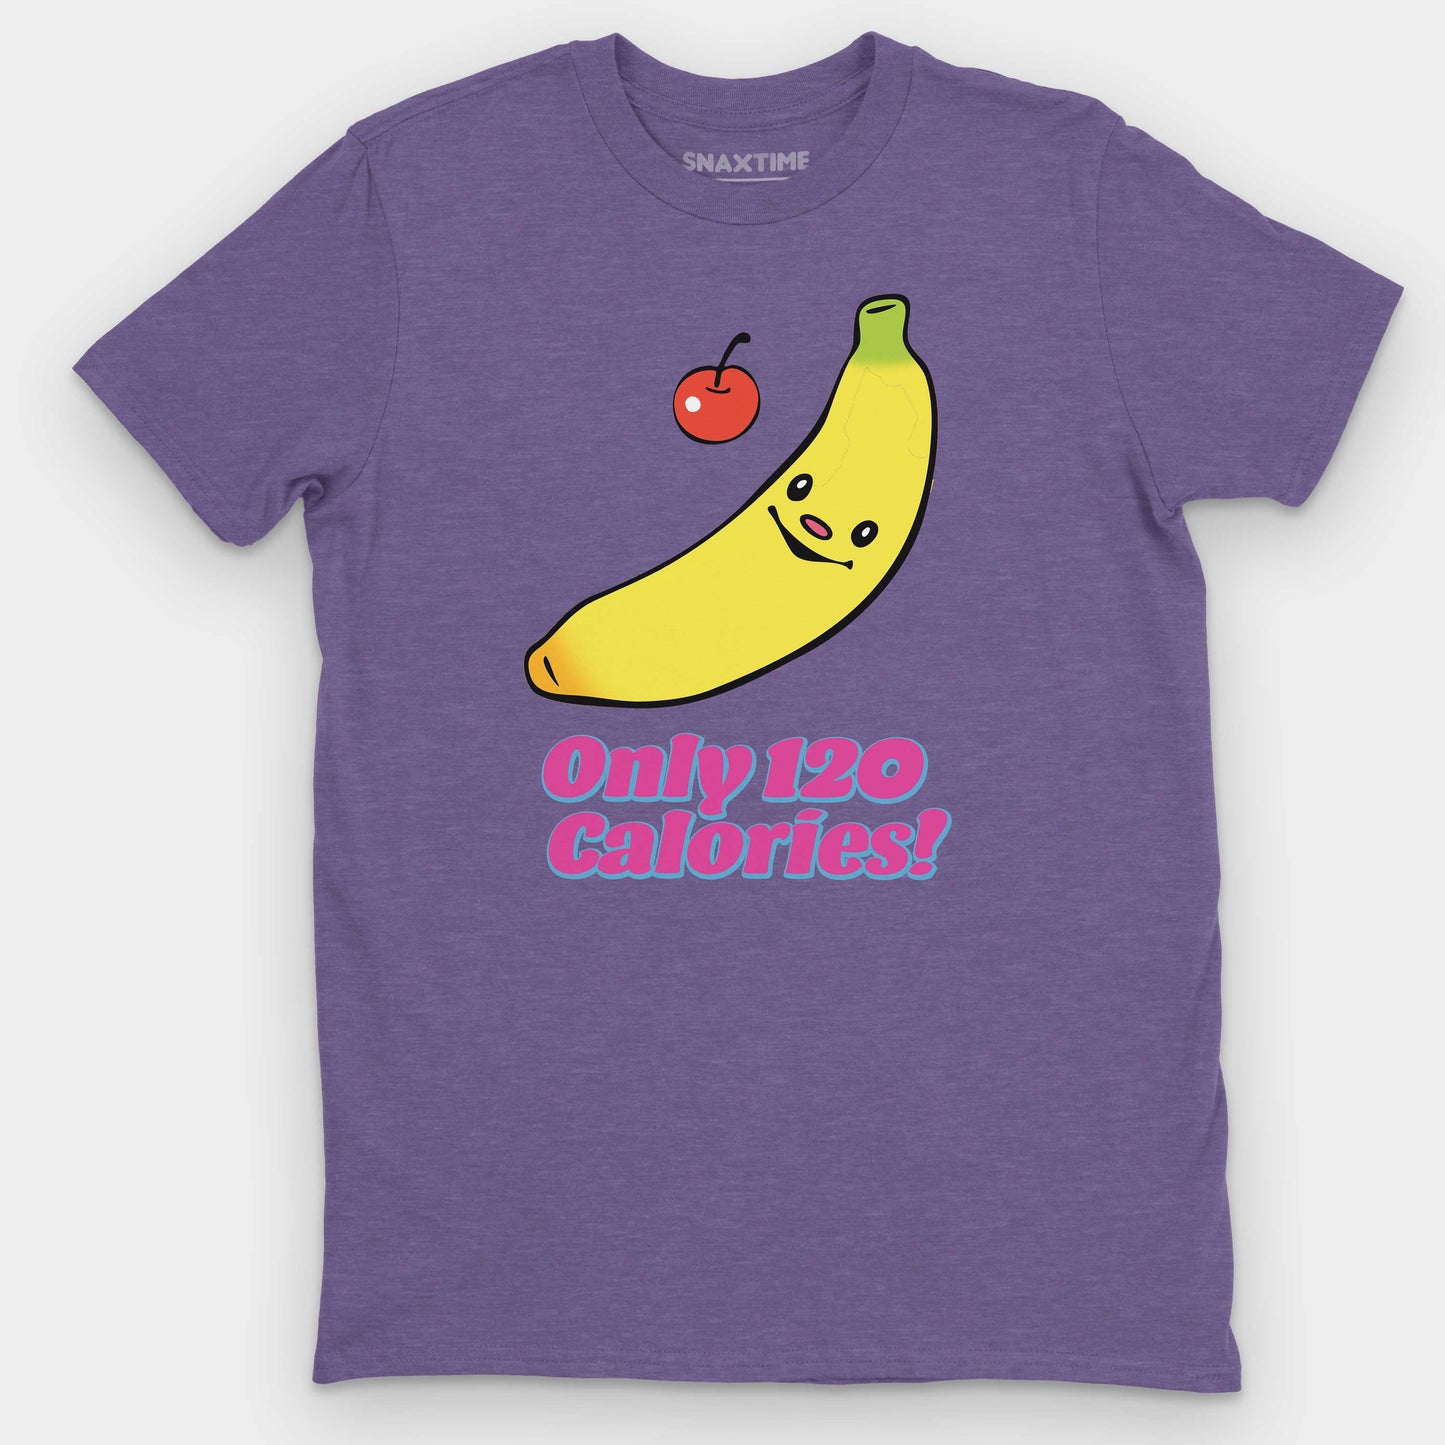 Heather Purple Banana Lite Graphic T-Shirt by Snaxtime